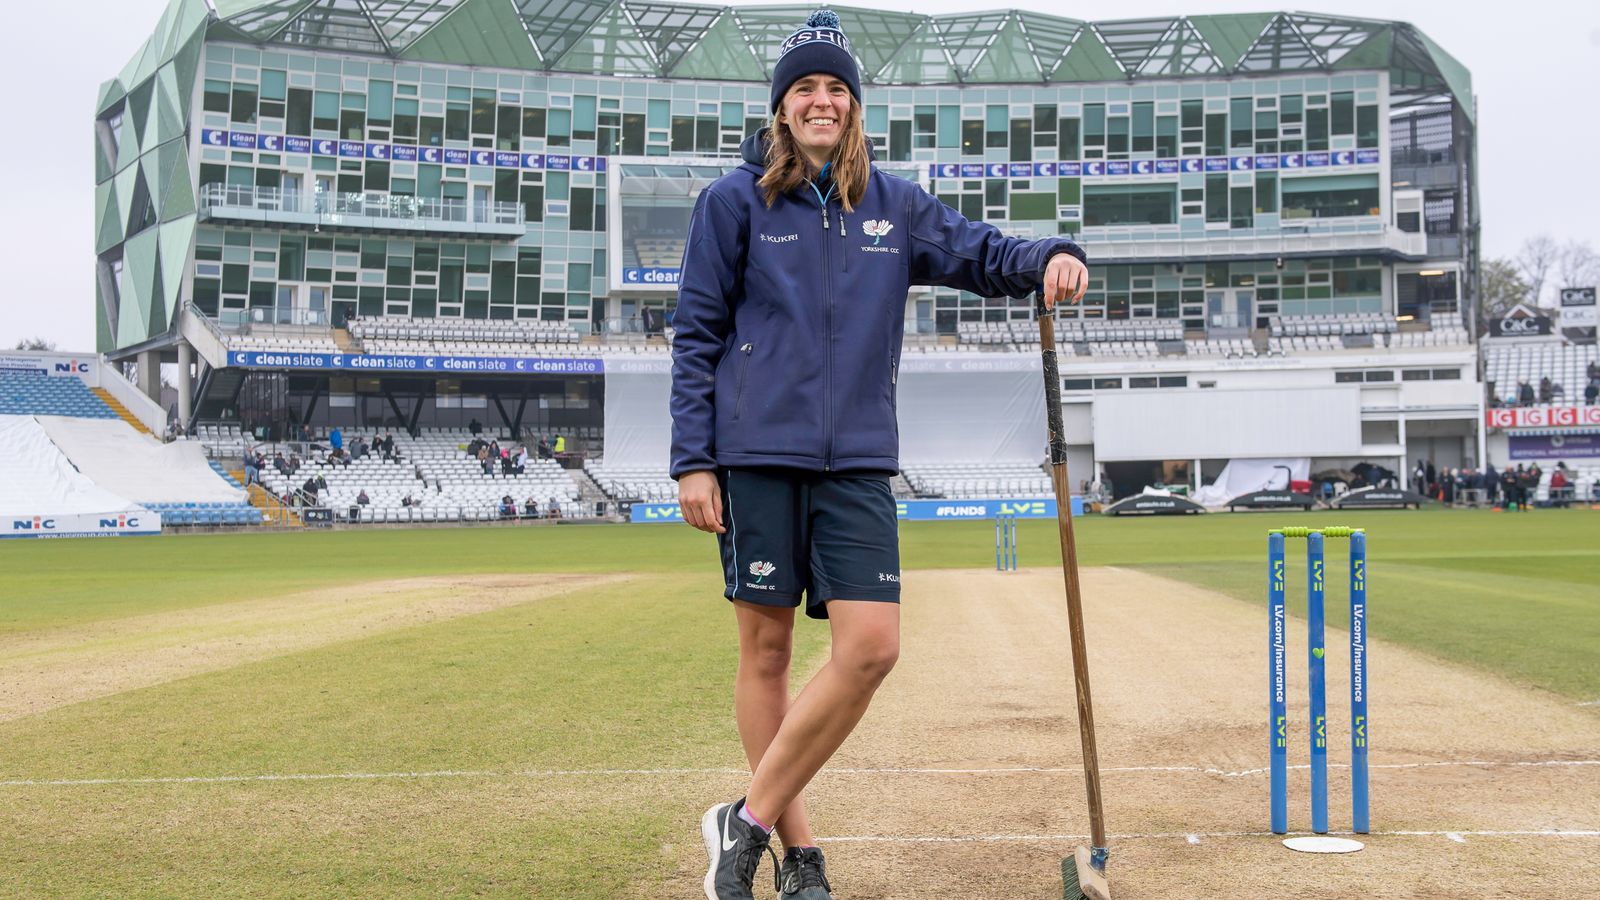 Cricket’s pioneering women groundstaff Meg Lay and Jasmine Nicholls are inspiring change in cricket